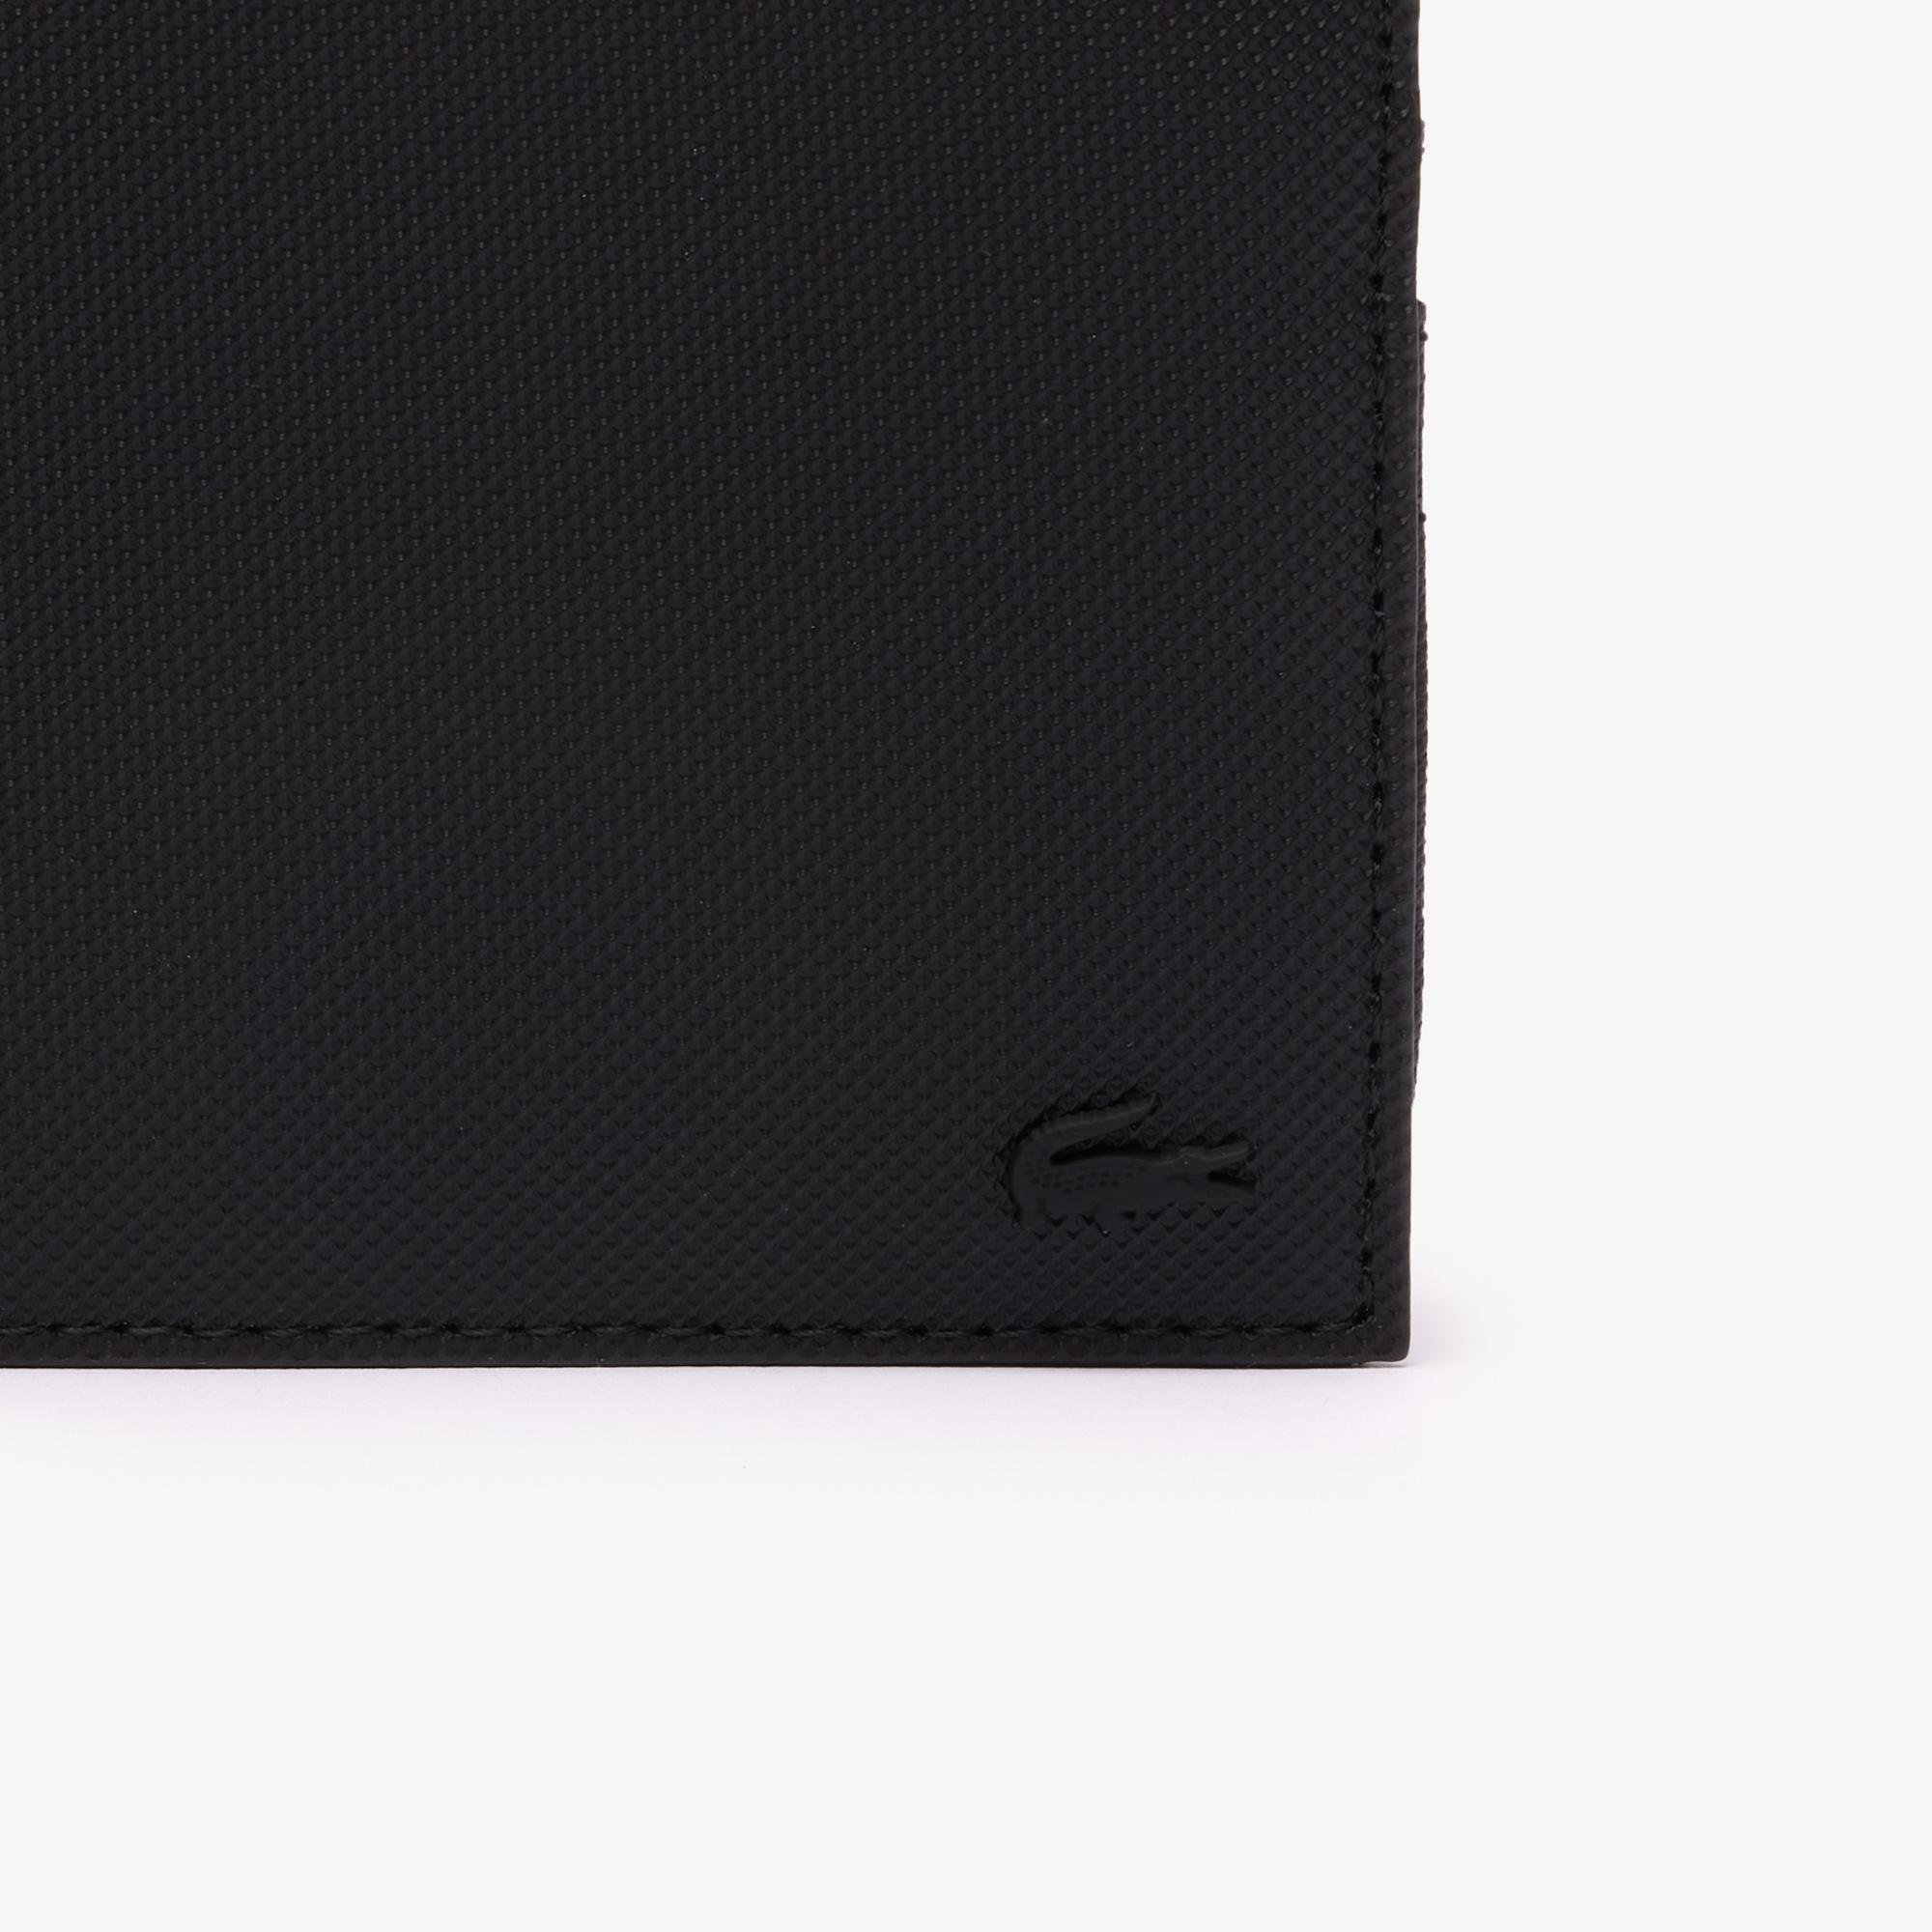 Lacoste Men's Classic Medium Folding Wallet